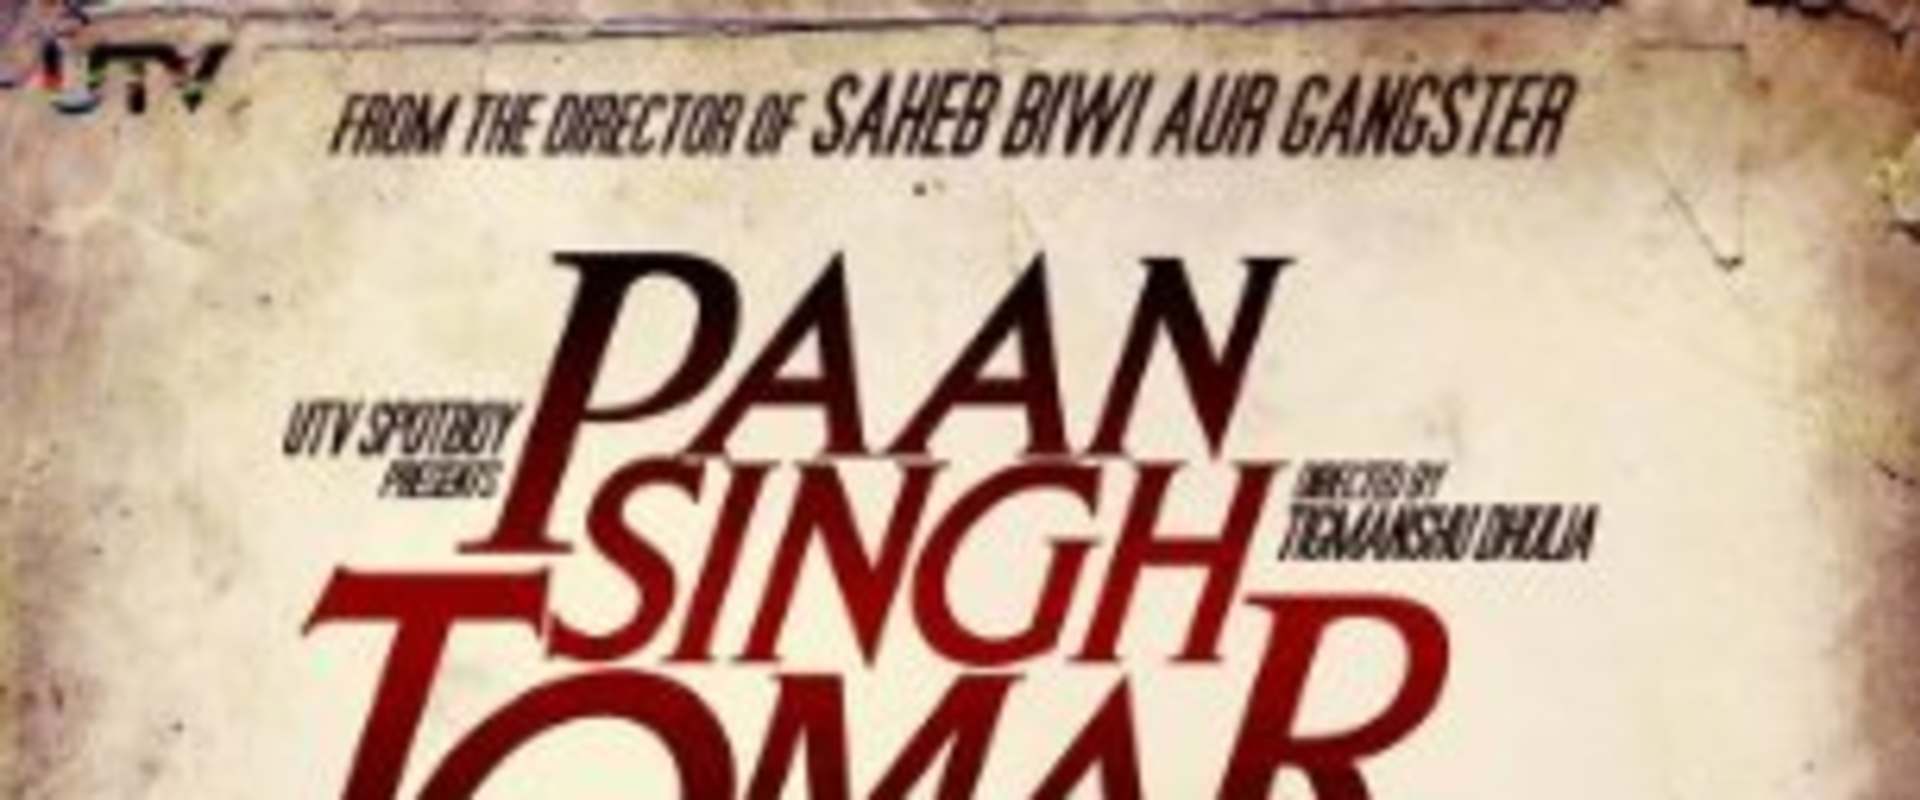 Paan Singh Tomar background 1